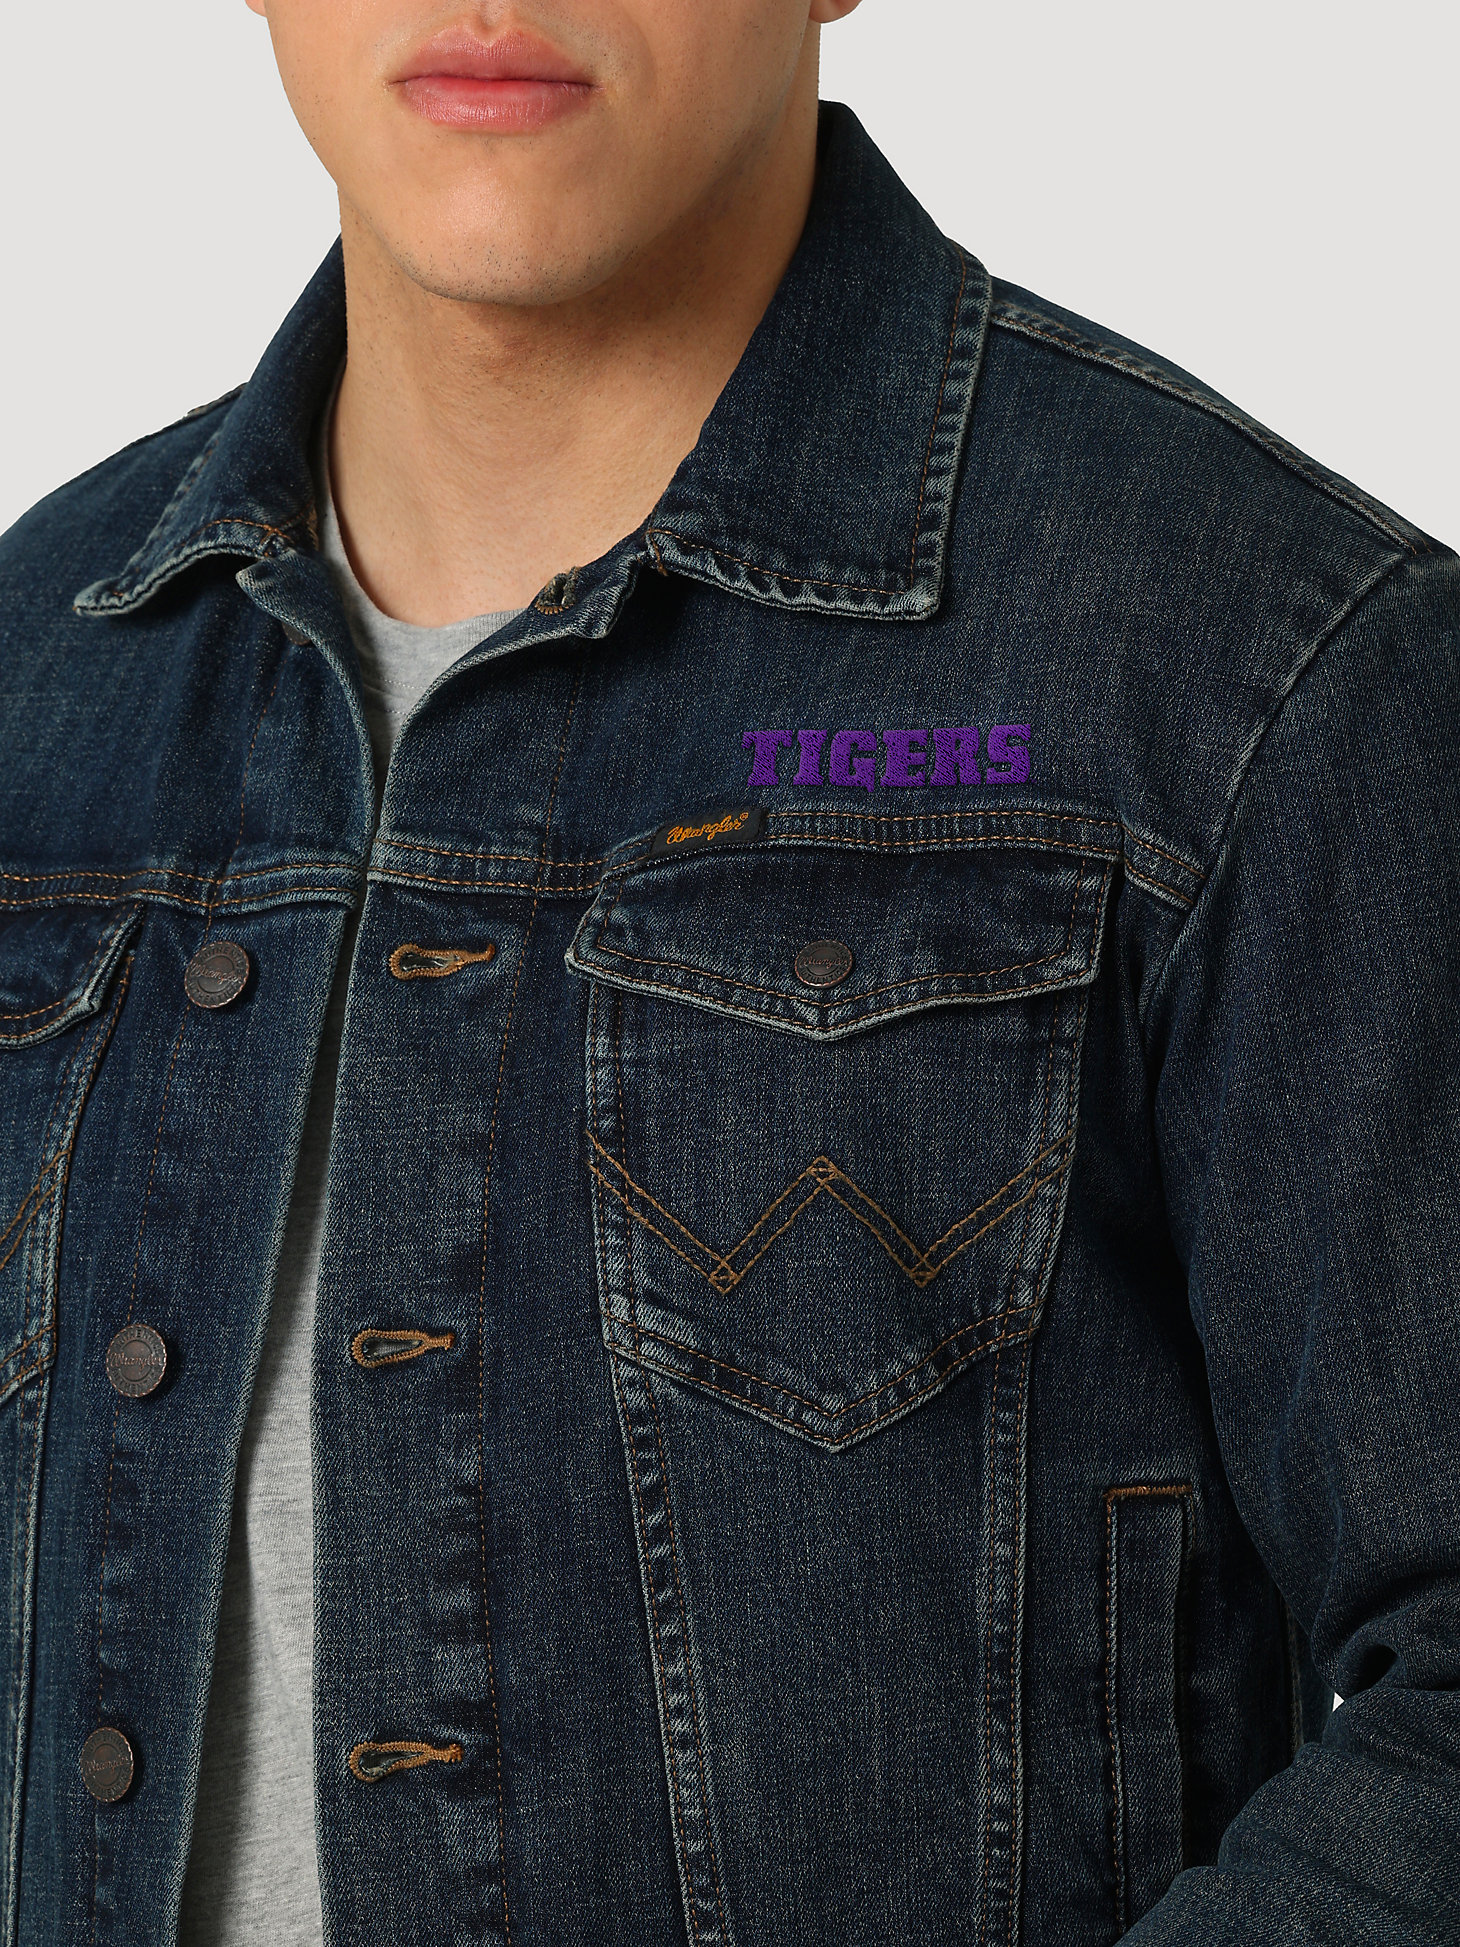 Men's Wrangler Retro Collegiate Embroidered Denim Jacket in Louisiana State University alternative view 3